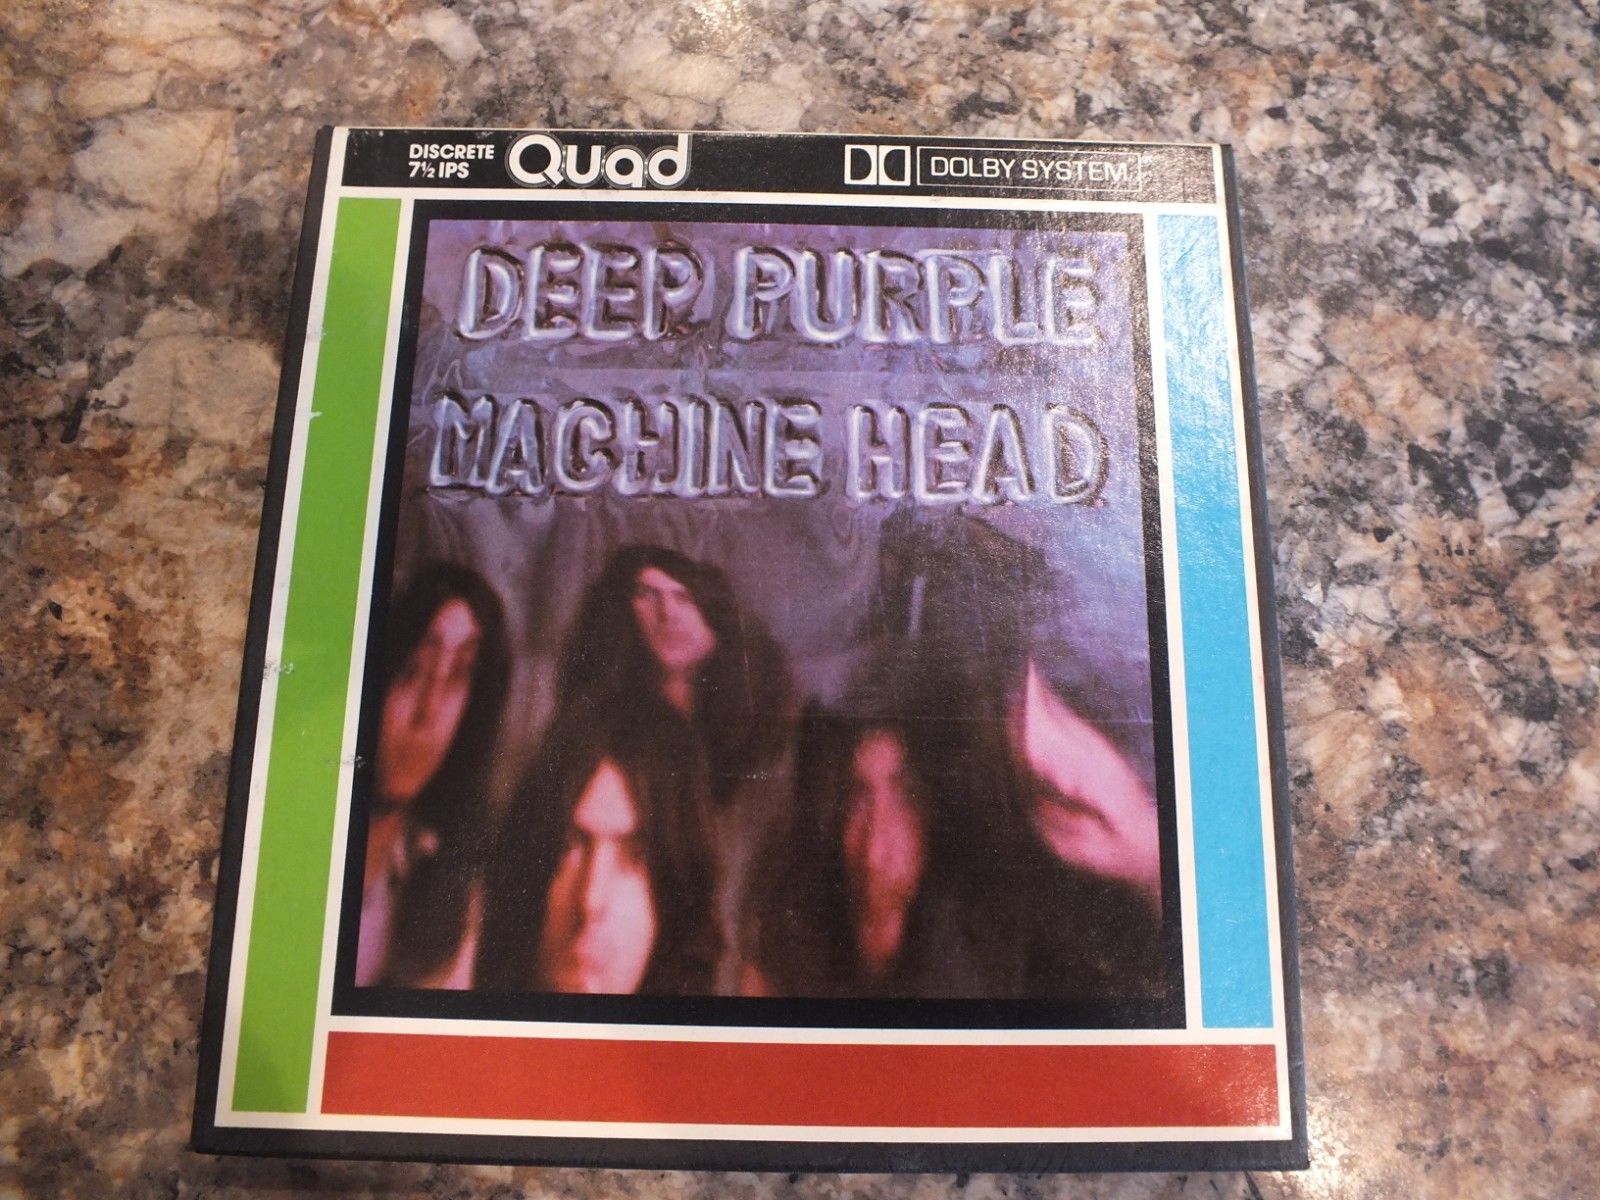  Reel to Reel Tape 7.5 IPS Quadraphonic Deep Purple Machine  Head - auction details